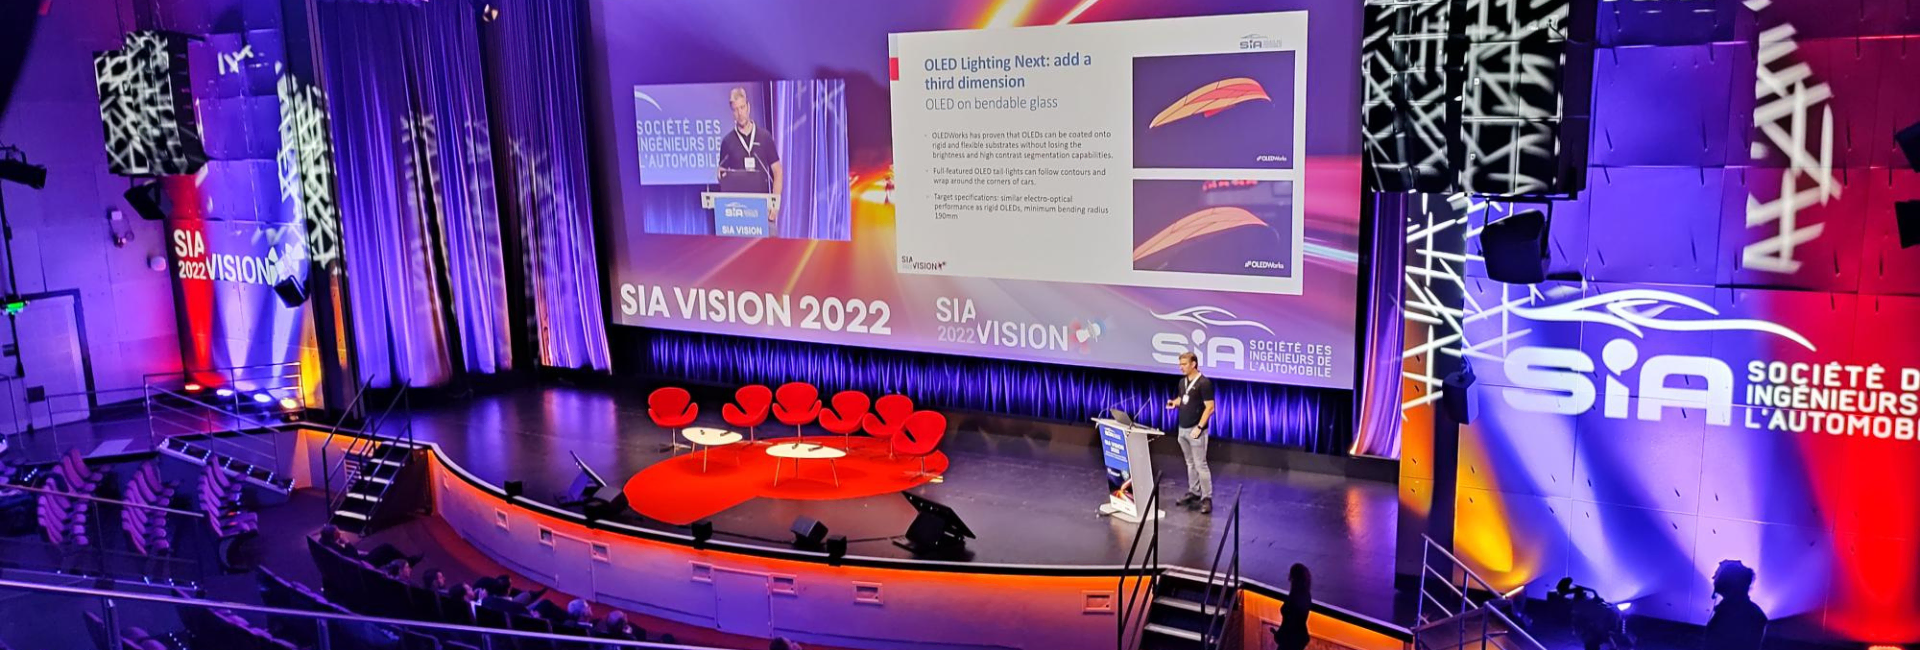 OLEDWorks Returns to Paris for SIA Vision Conference